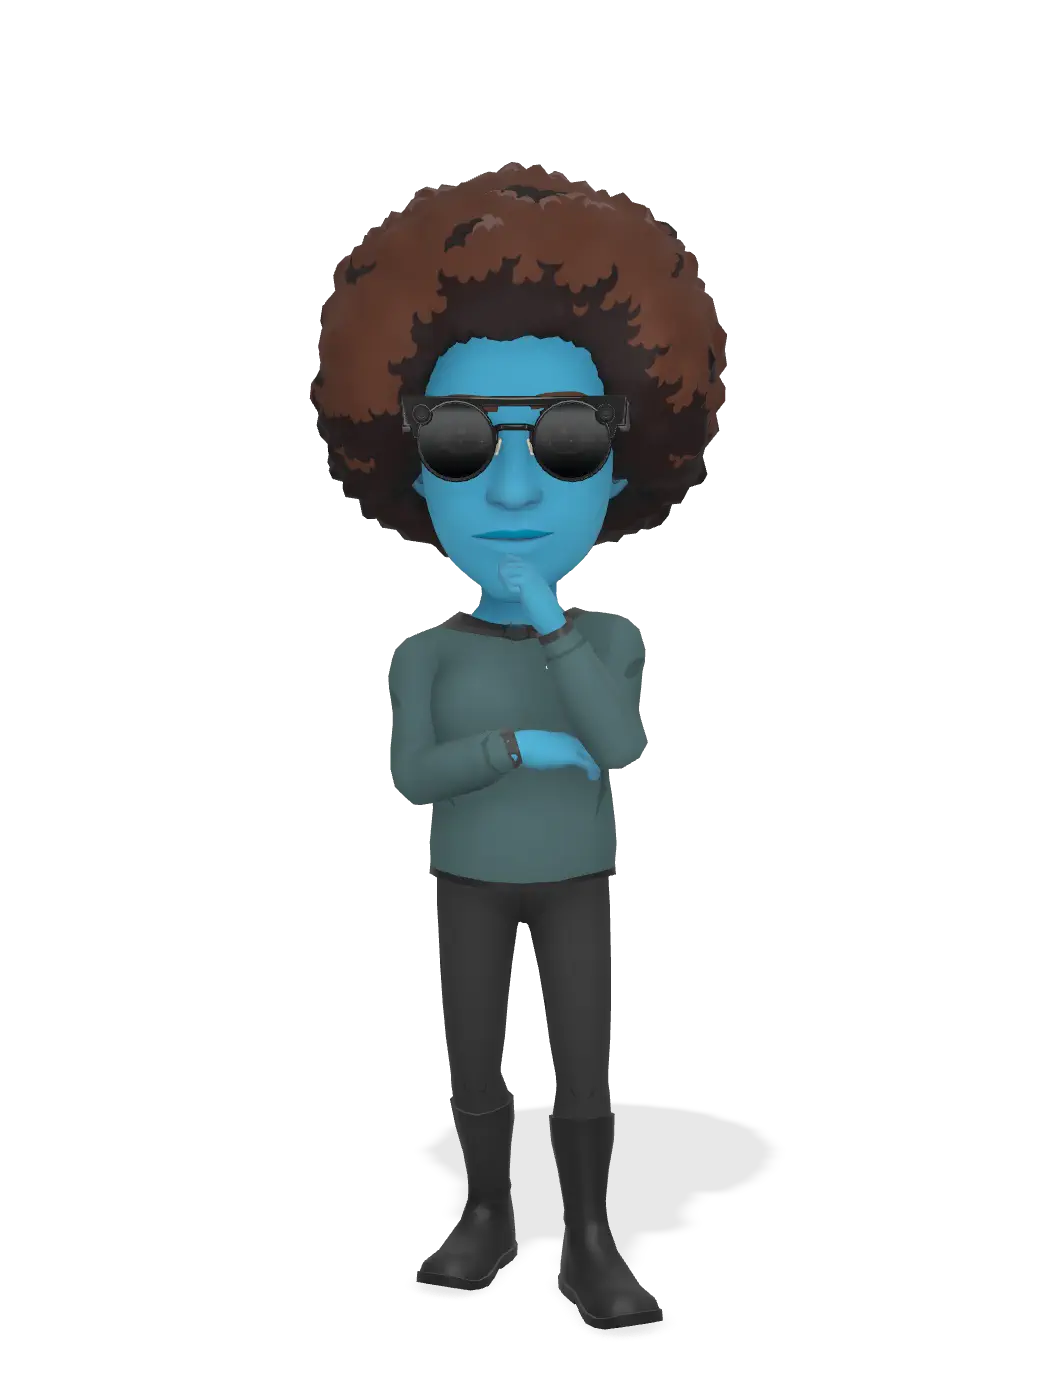 3D Bitmoji for aragorn_spock42 avatar